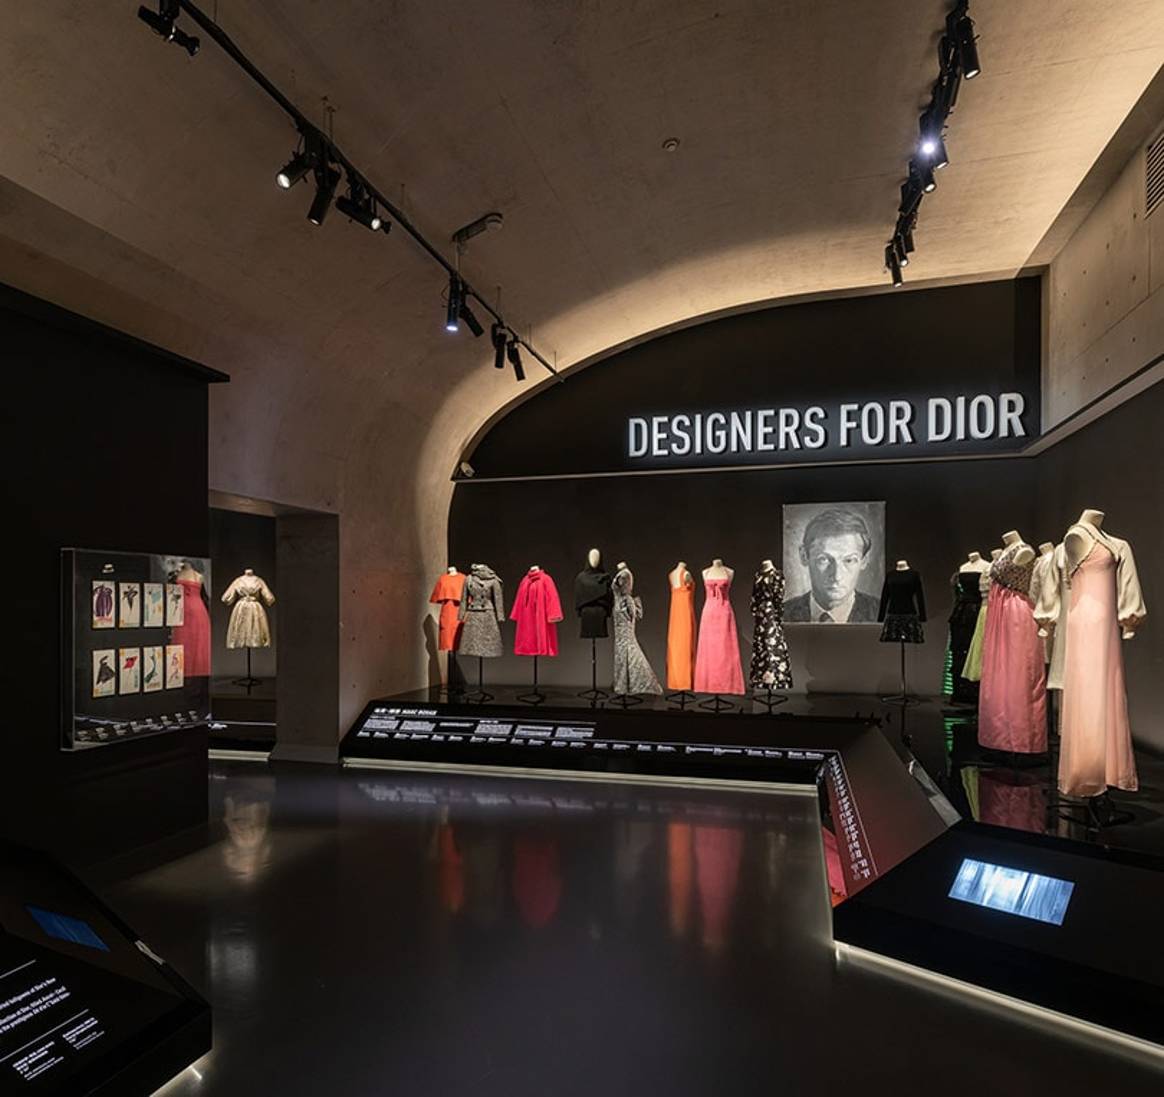 L’exposition « Christian Dior: Designer of Dreams » arrive à Shanghai